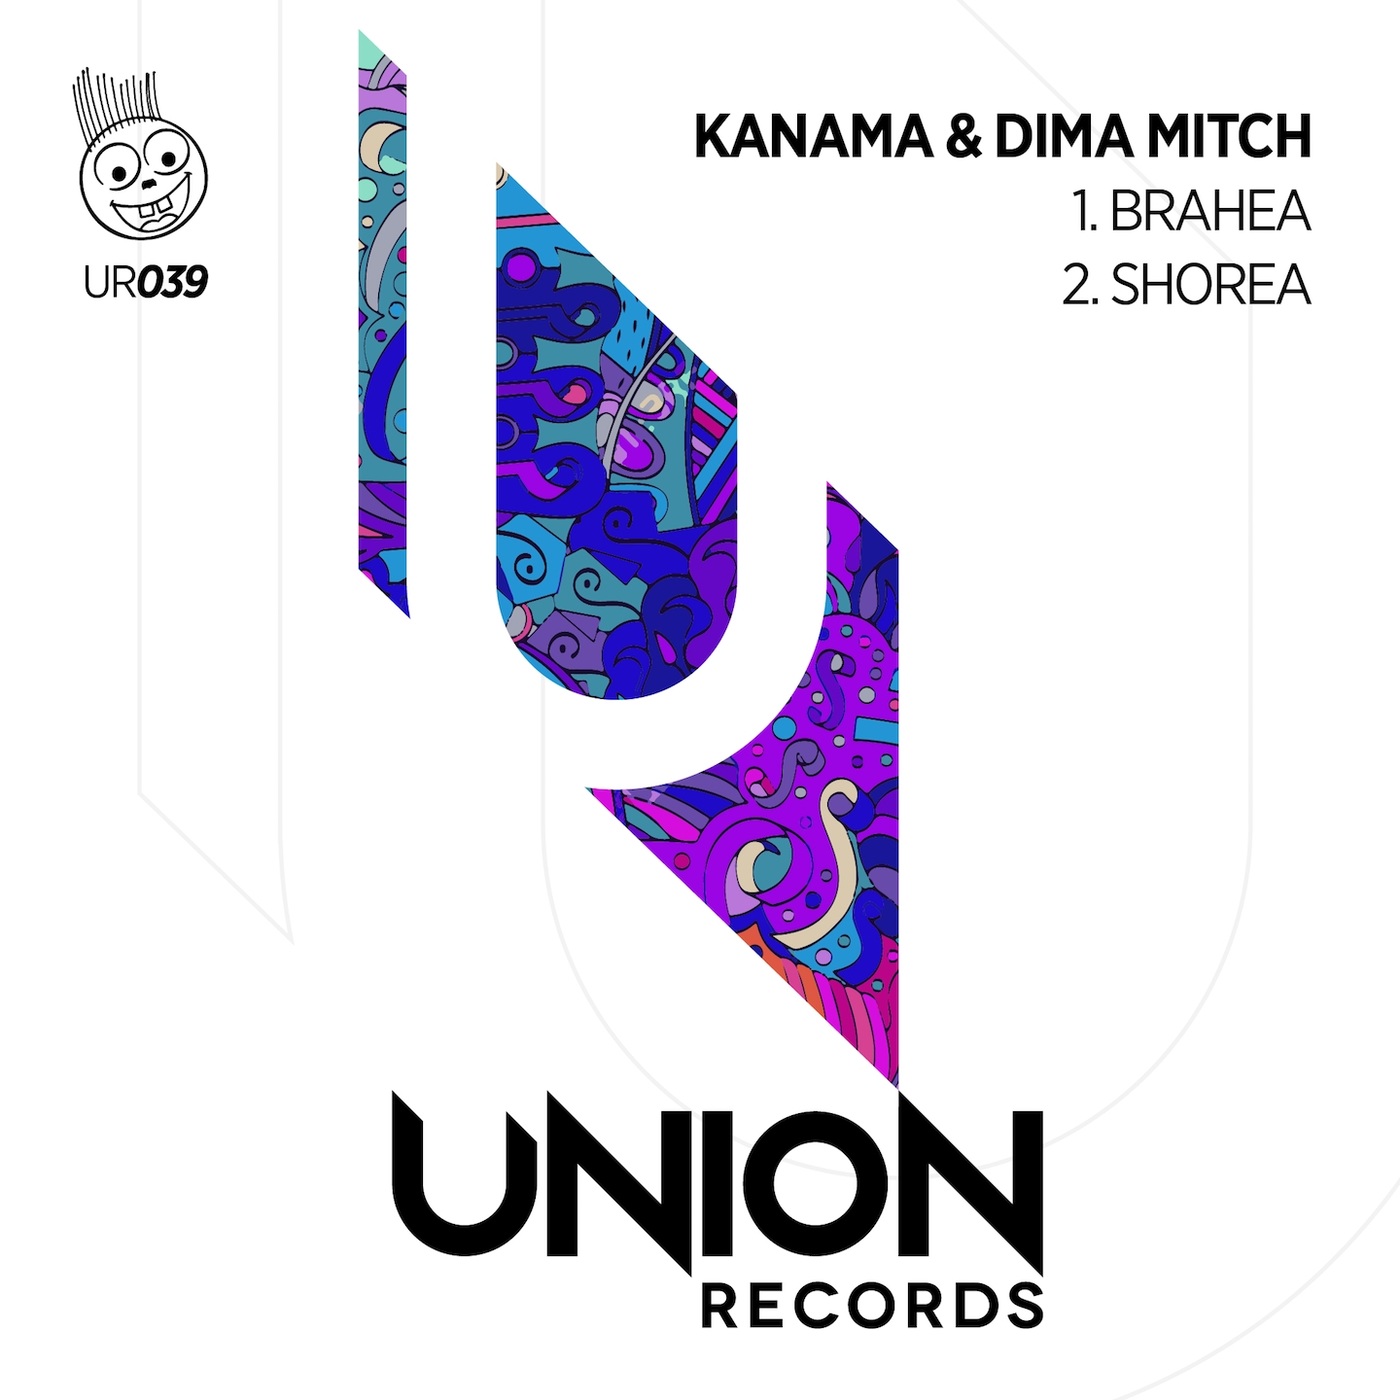 Kanama & Dima Mitch - Brahea EP / Union Records